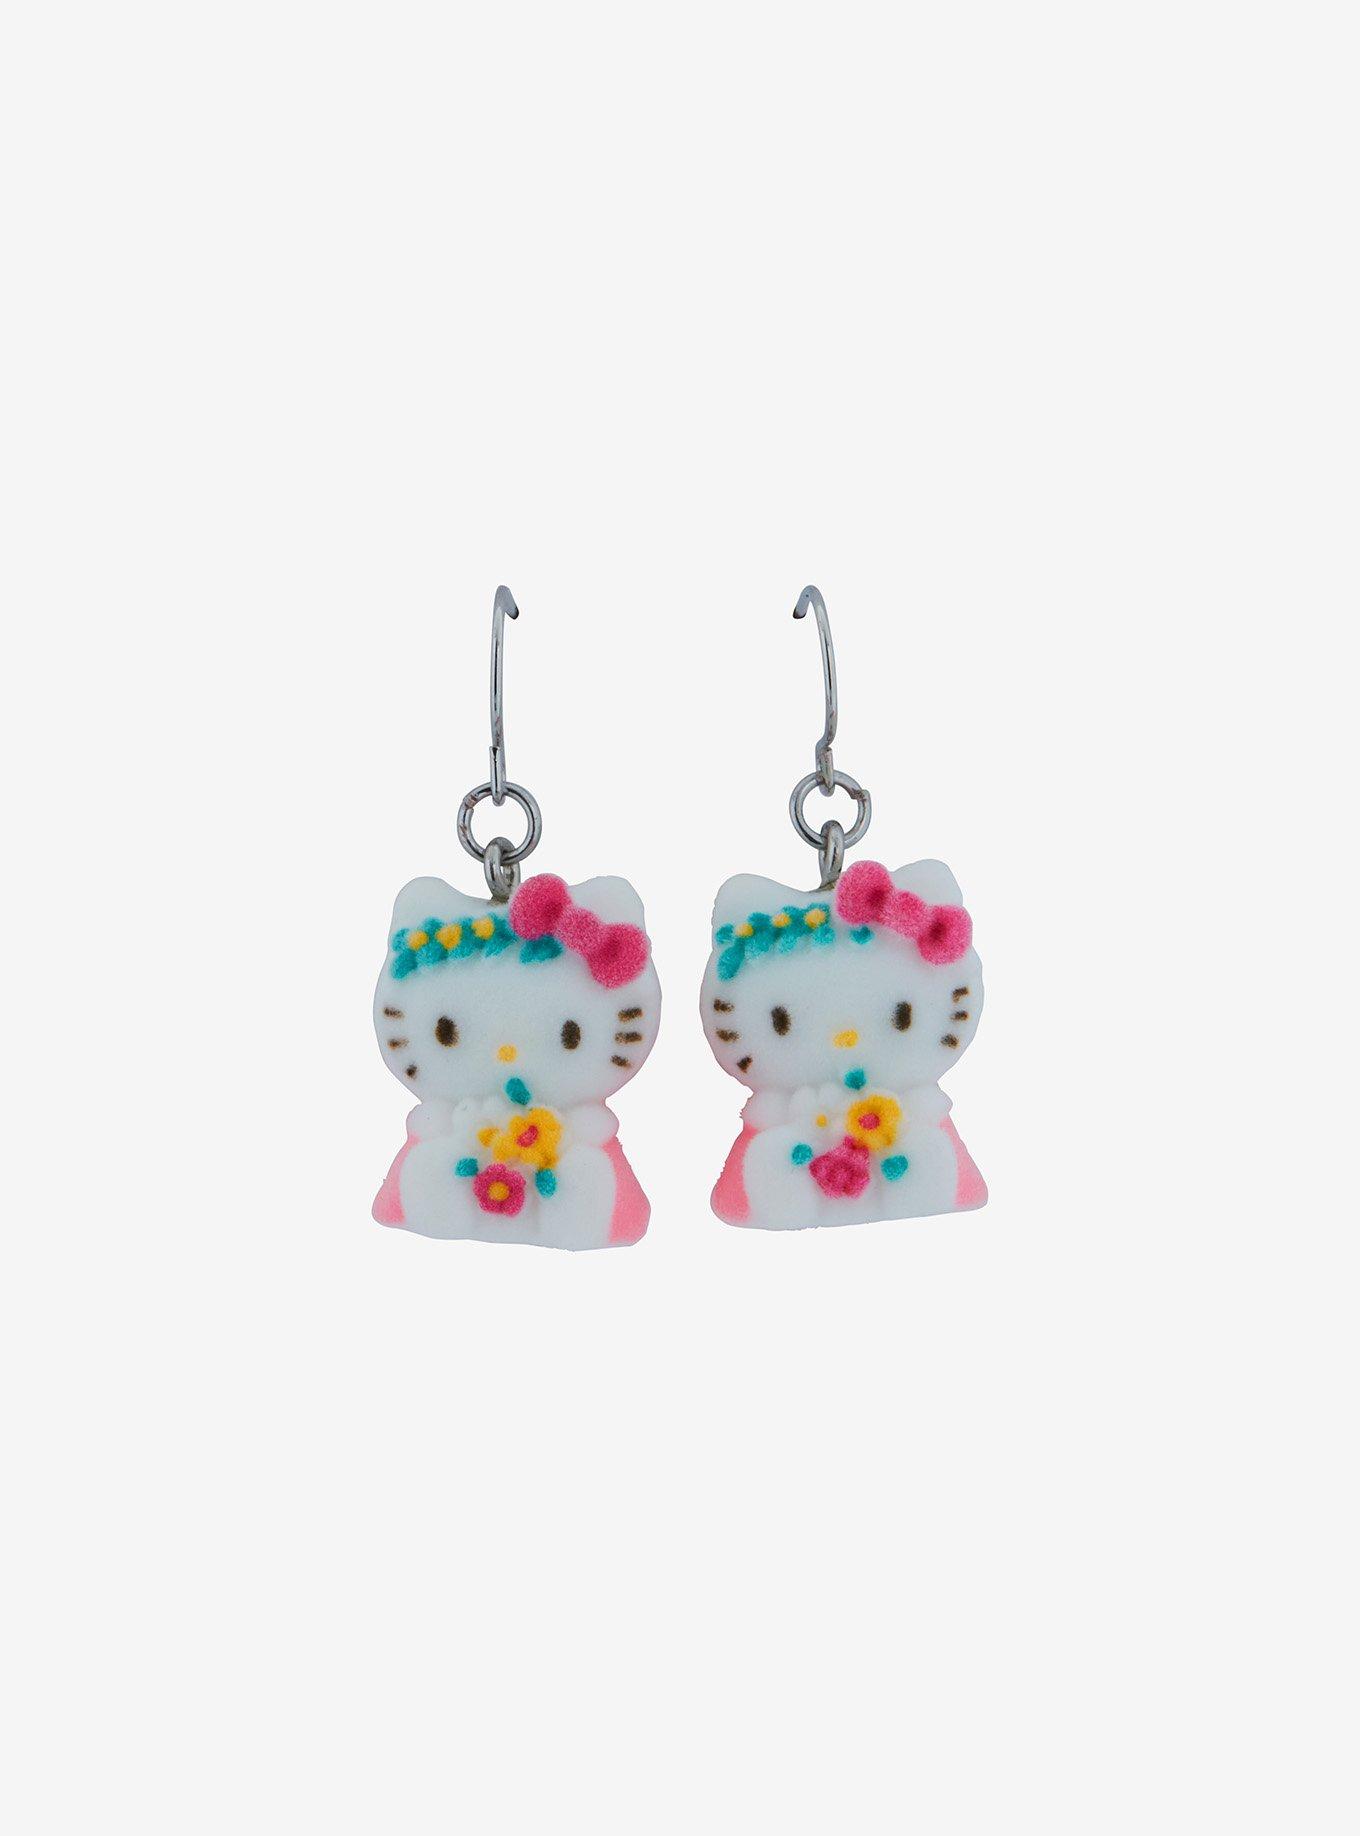 Sanrio Hello Kitty Virgo Figural Earrings - BoxLunch Exclusive, , hi-res